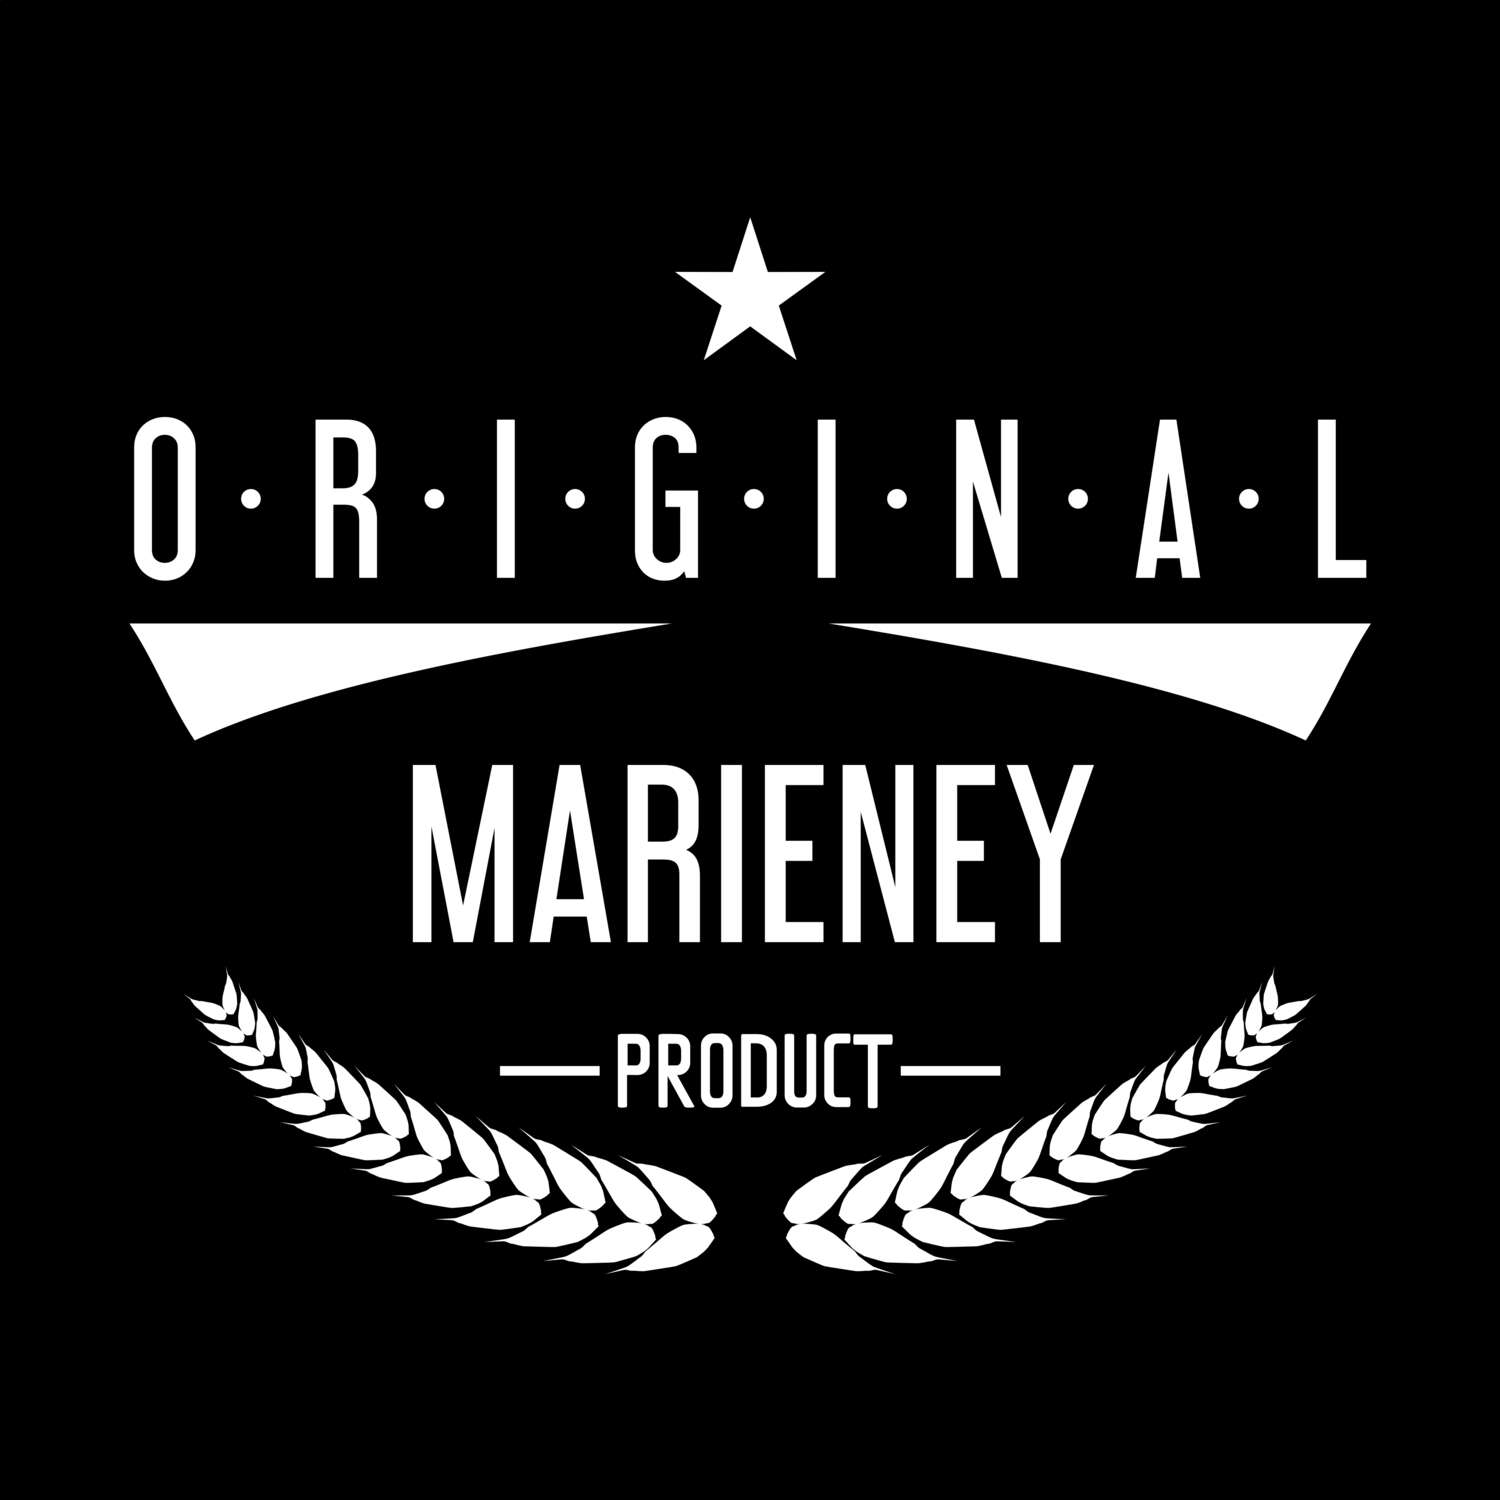 Marieney T-Shirt »Original Product«